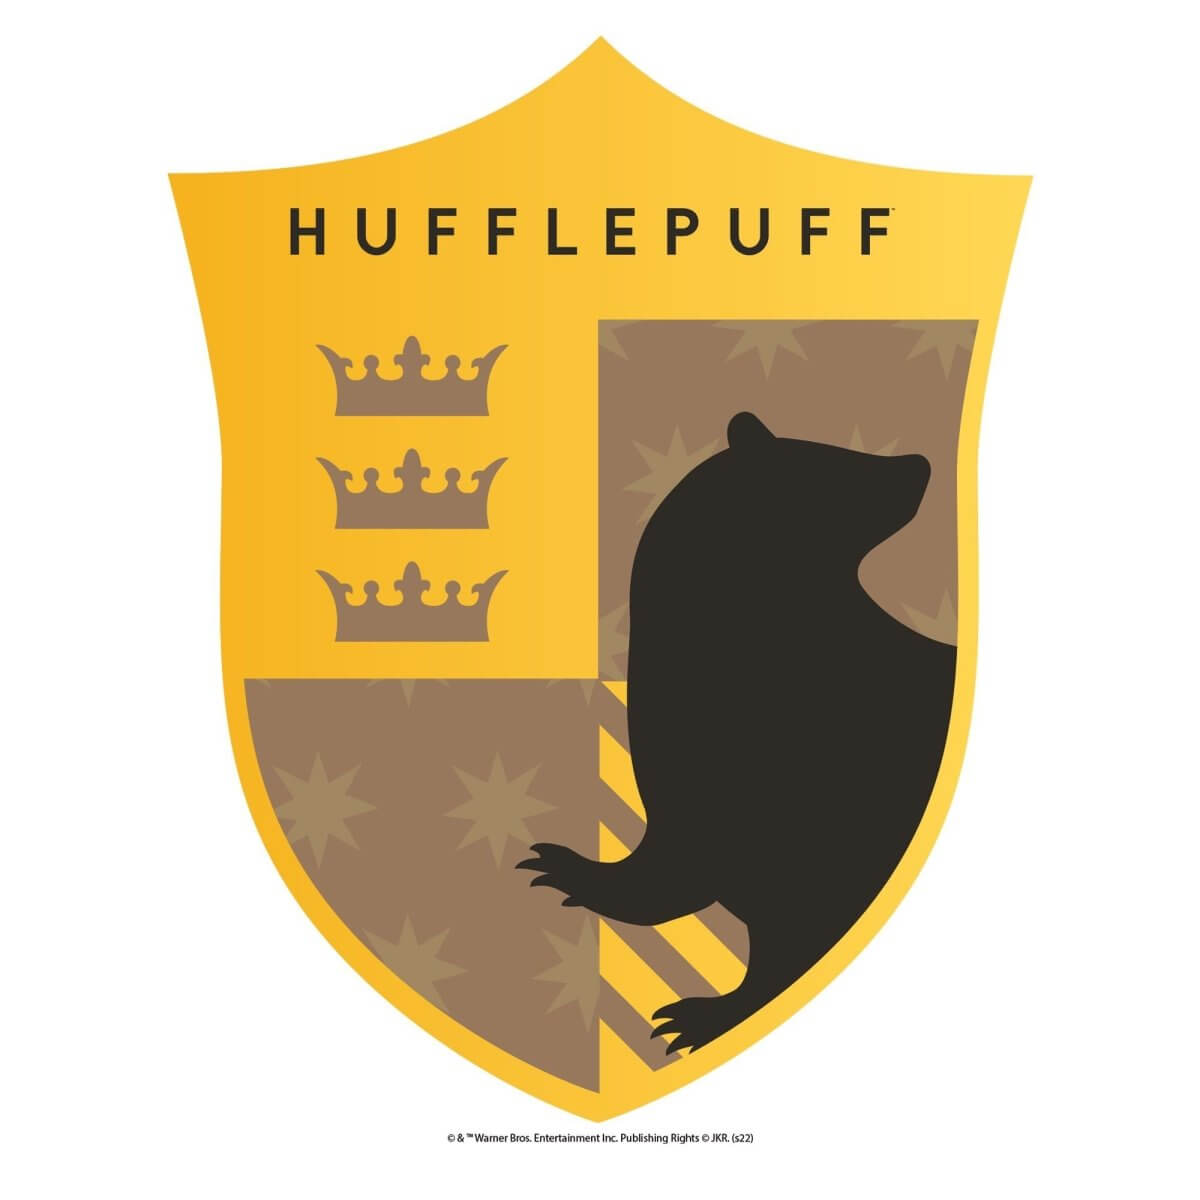 Kismet Decals Harry Potter Hufflepuff Badge V2 Licensed Wall Sticker - Easy DIY Home & Kids Room Decor Wall Decal Art - Kismet Decals